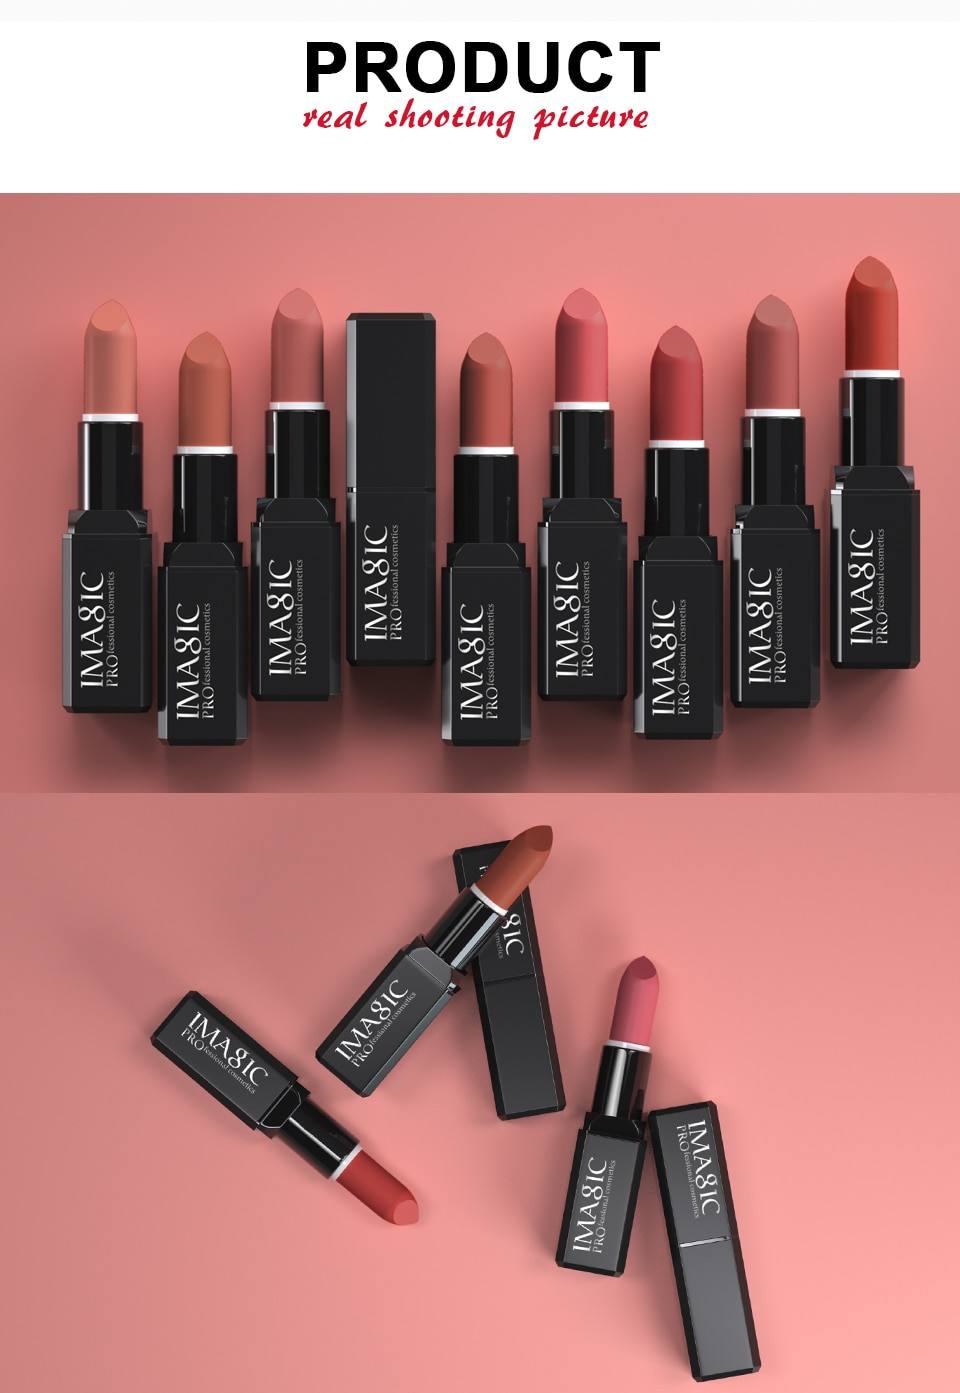 IMAGIC Waterproof Glossy Lipstick Smooth Moisturizer Pigment Woman Lipsticks Pintalabios Natural 16 Colors Batom Lip Makeup